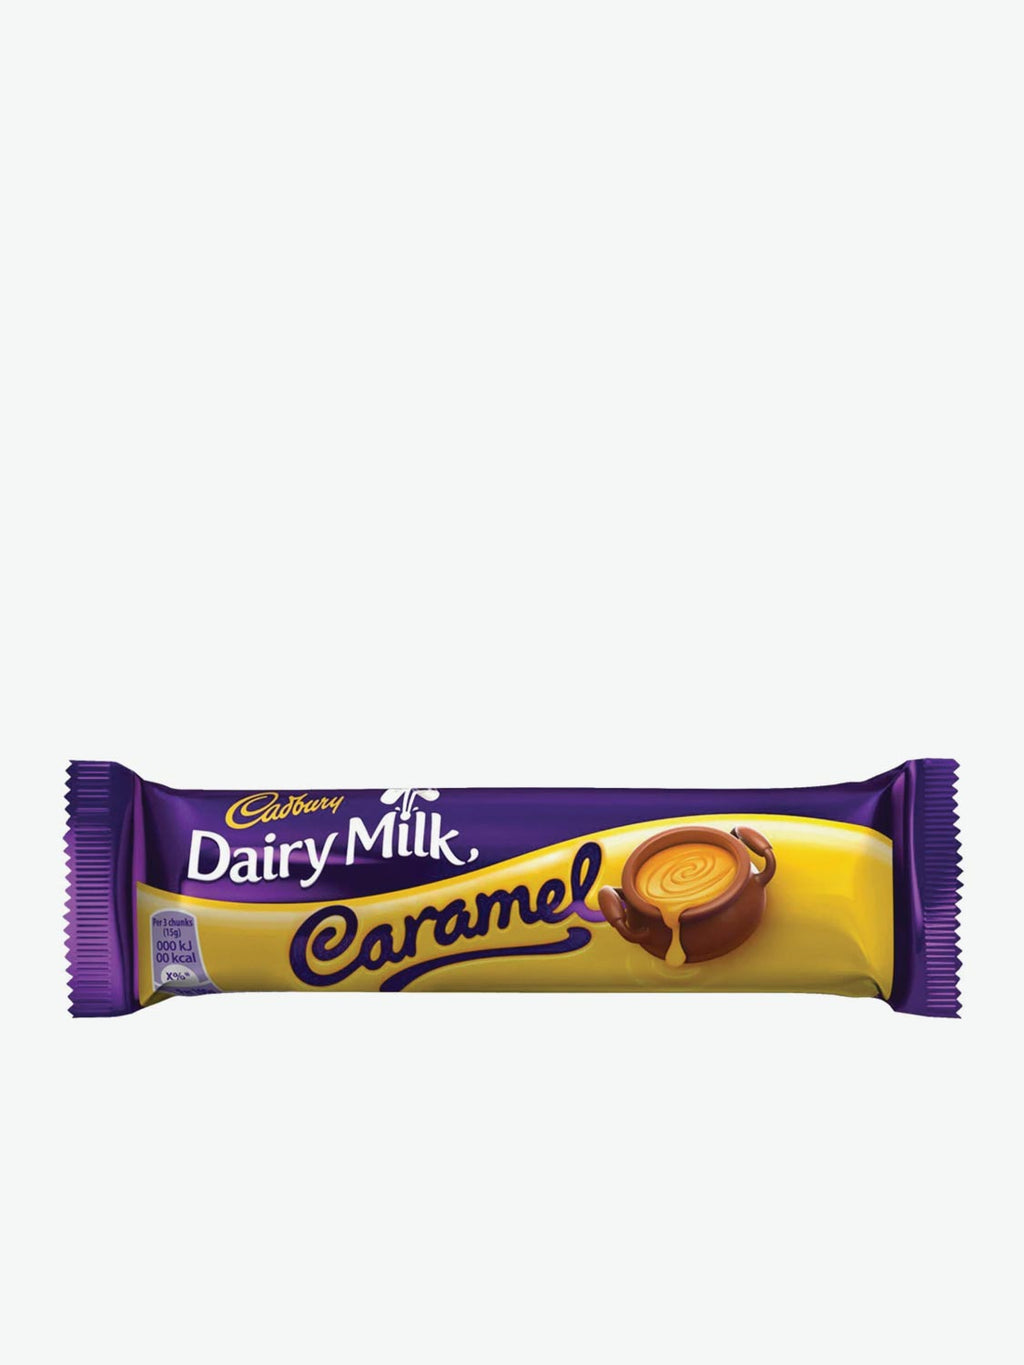 Cadbury Dairy Milk Caramel | A